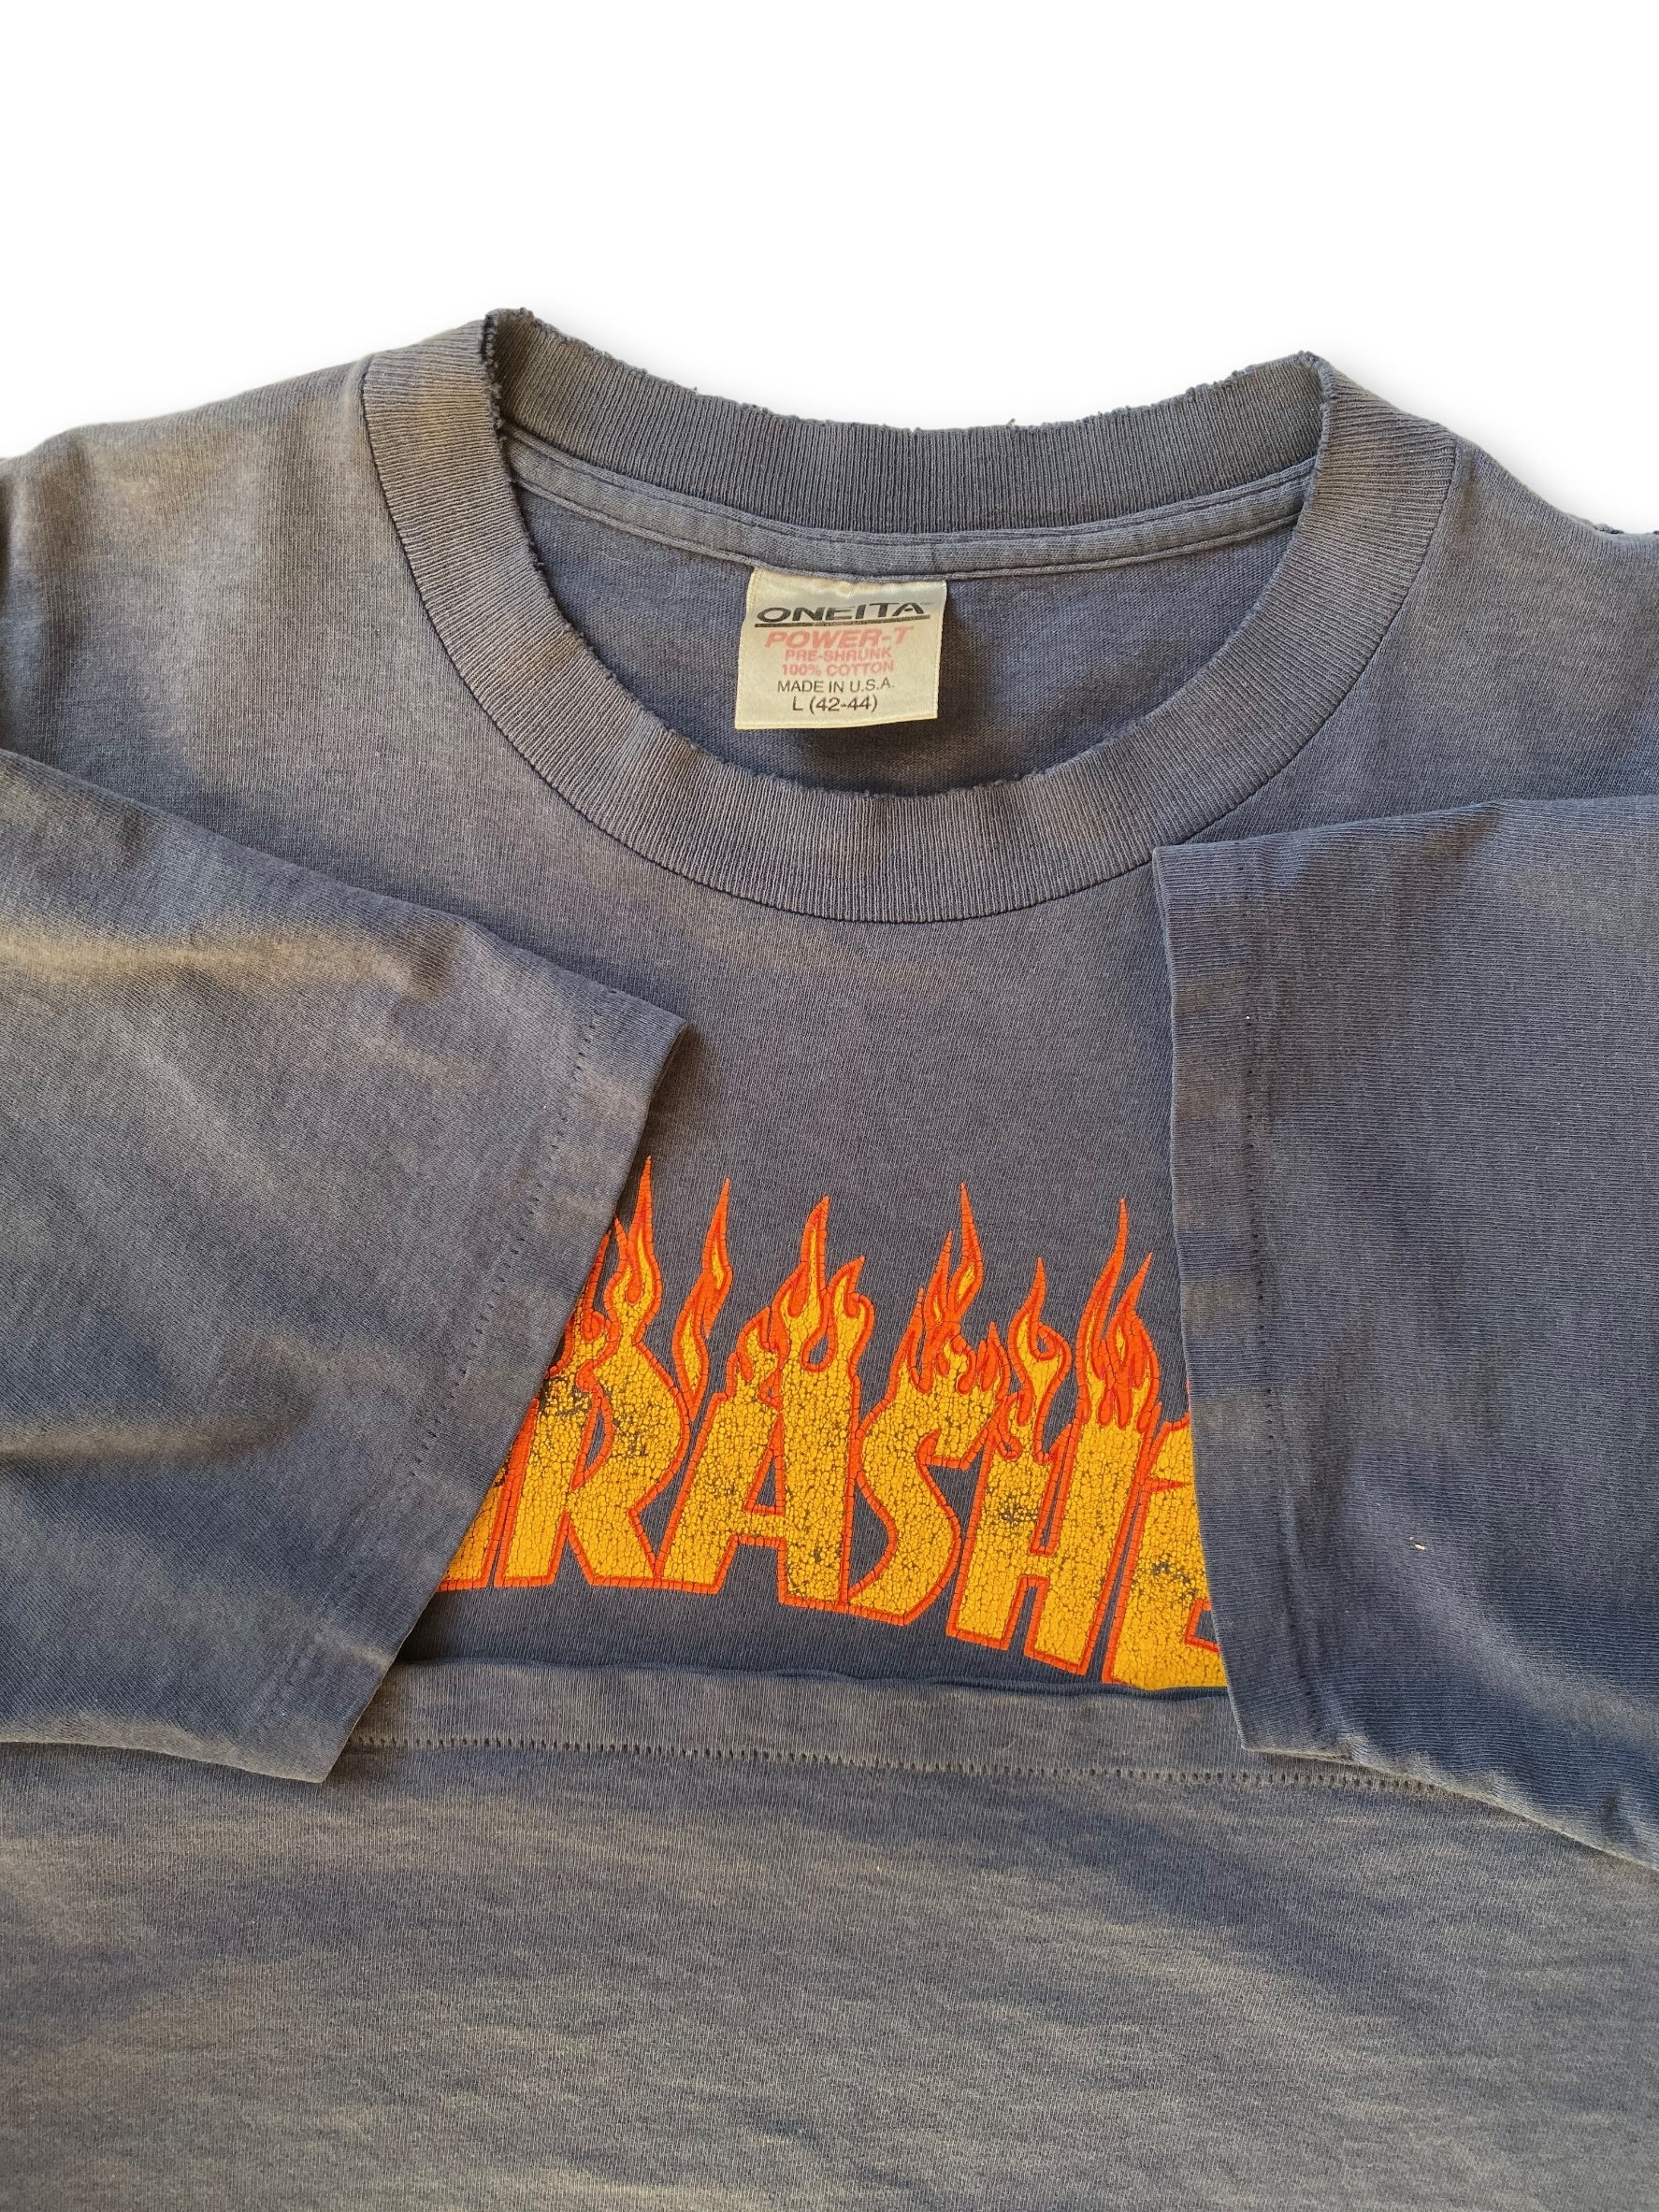 Vintage Thrasher T-Shirt - Large